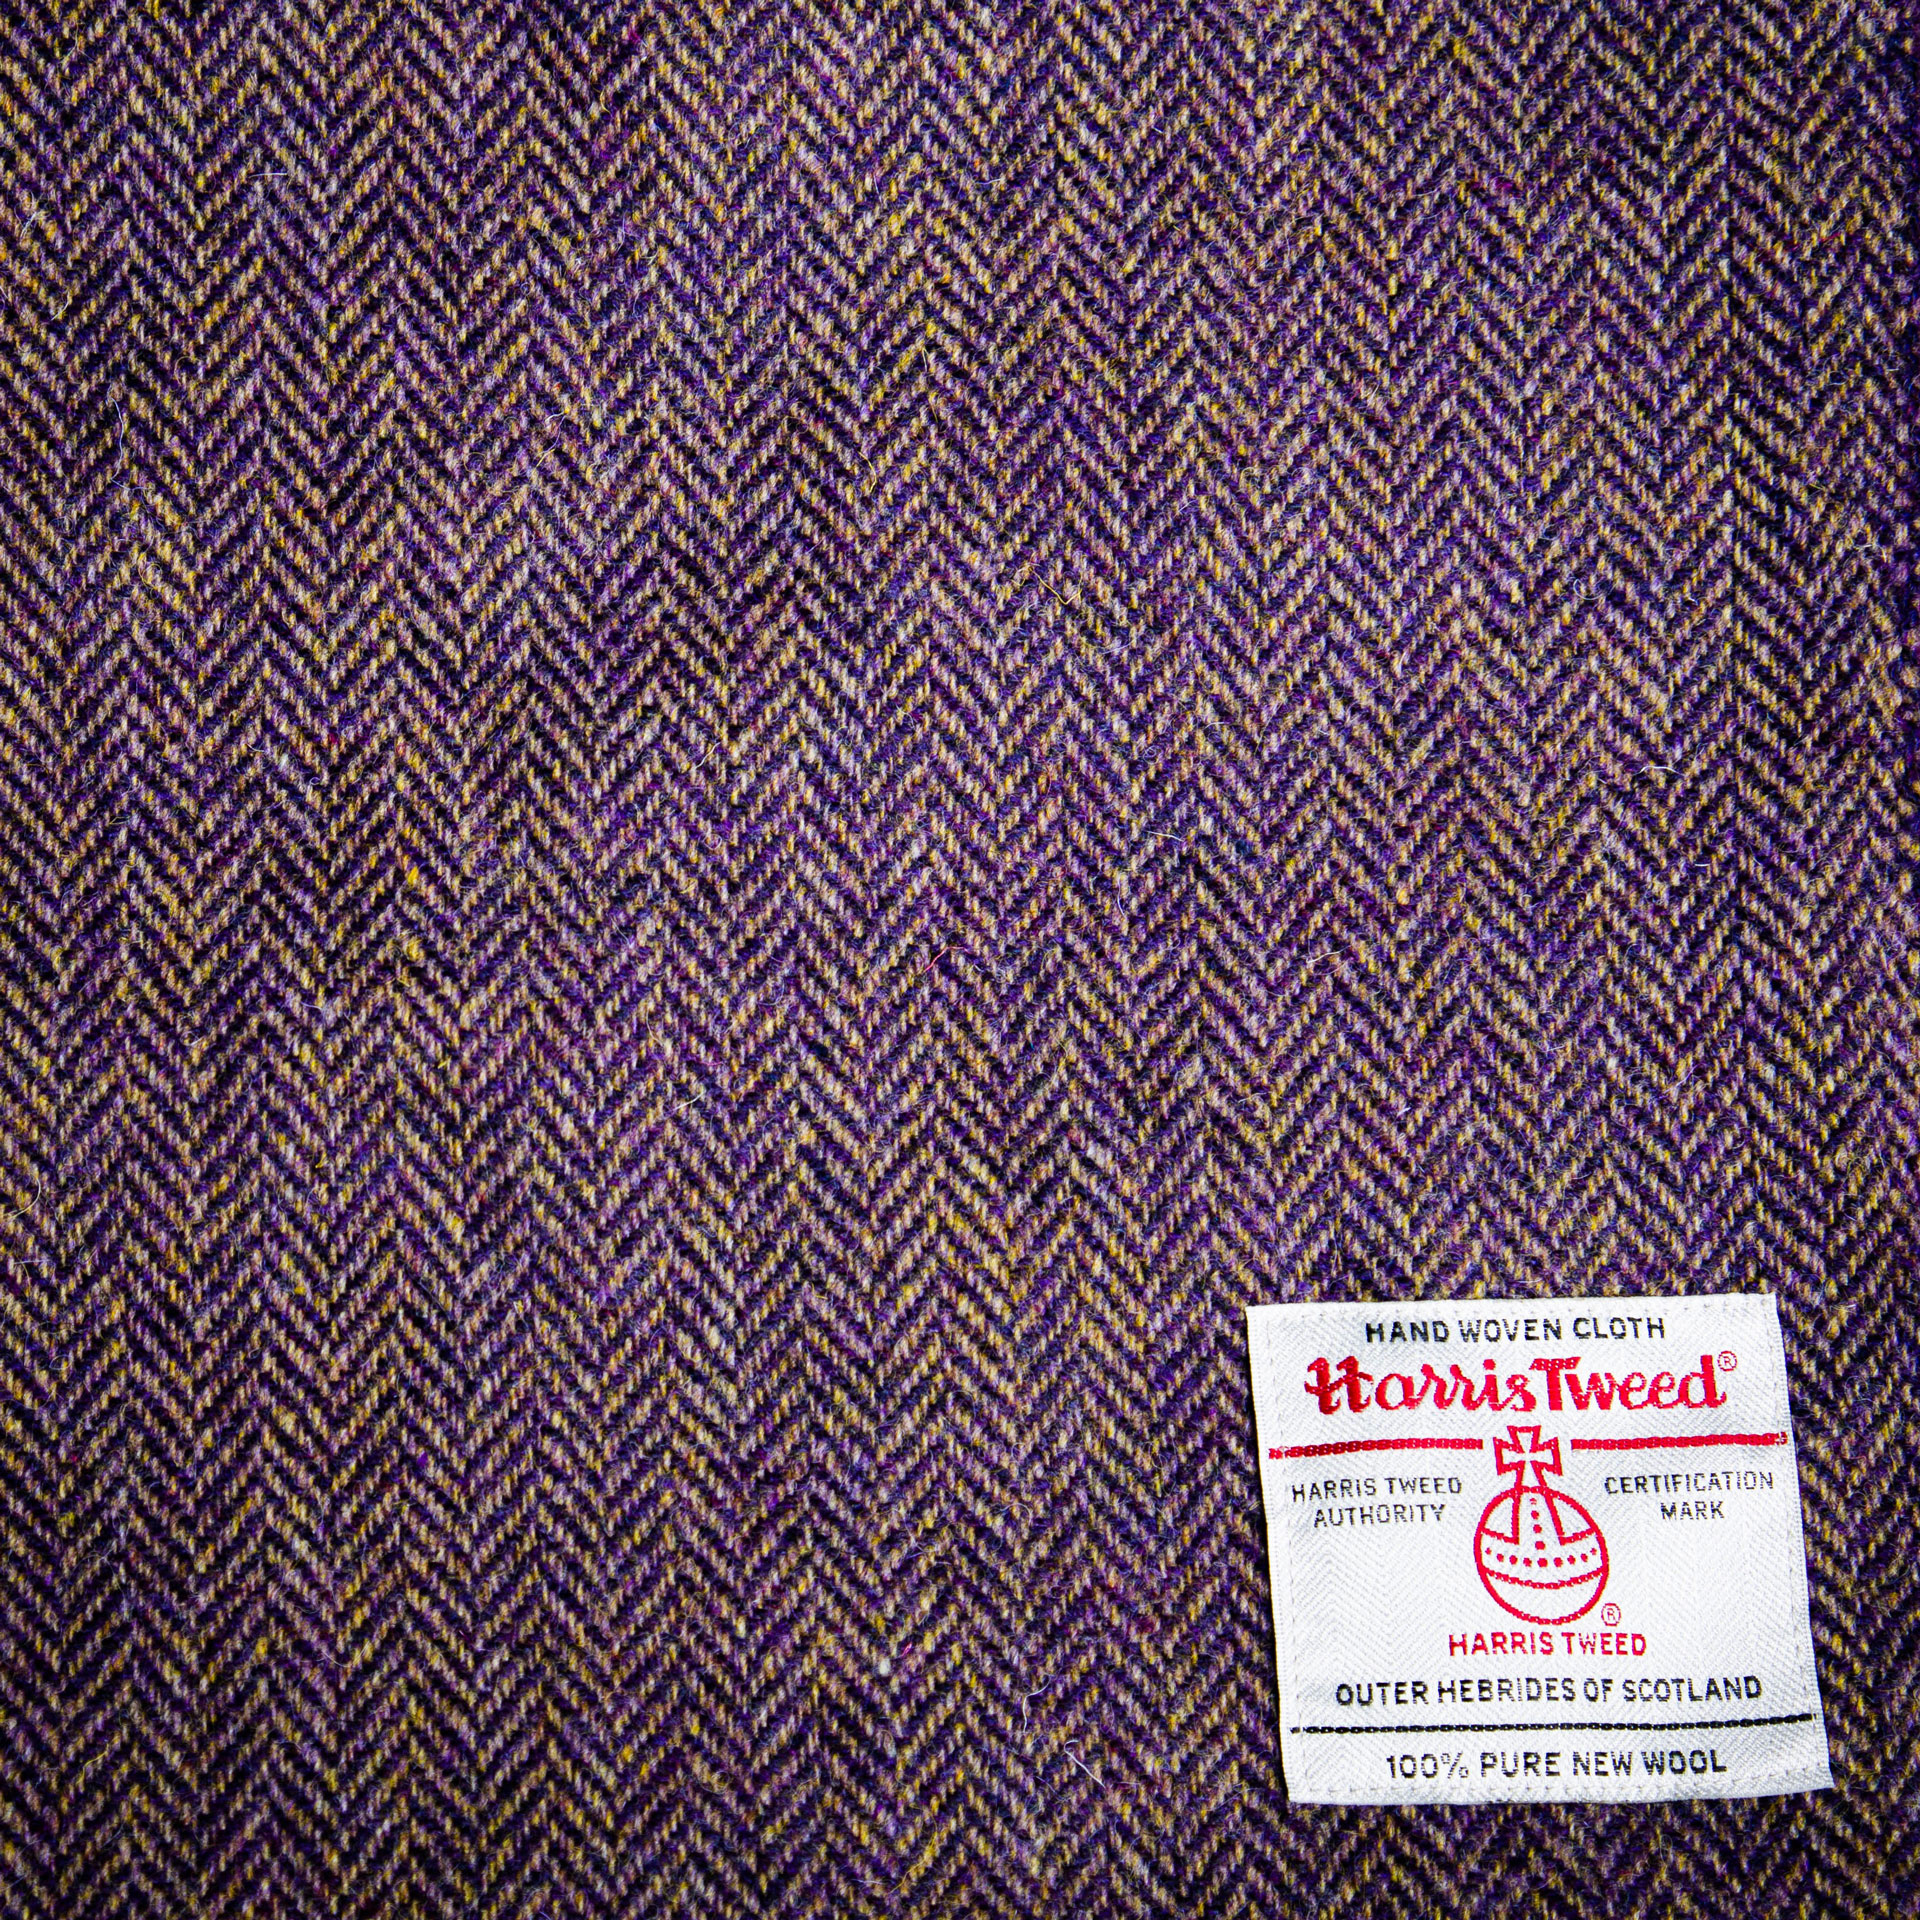 harris tweed authority carloway fabric purple herringbone amber northfield